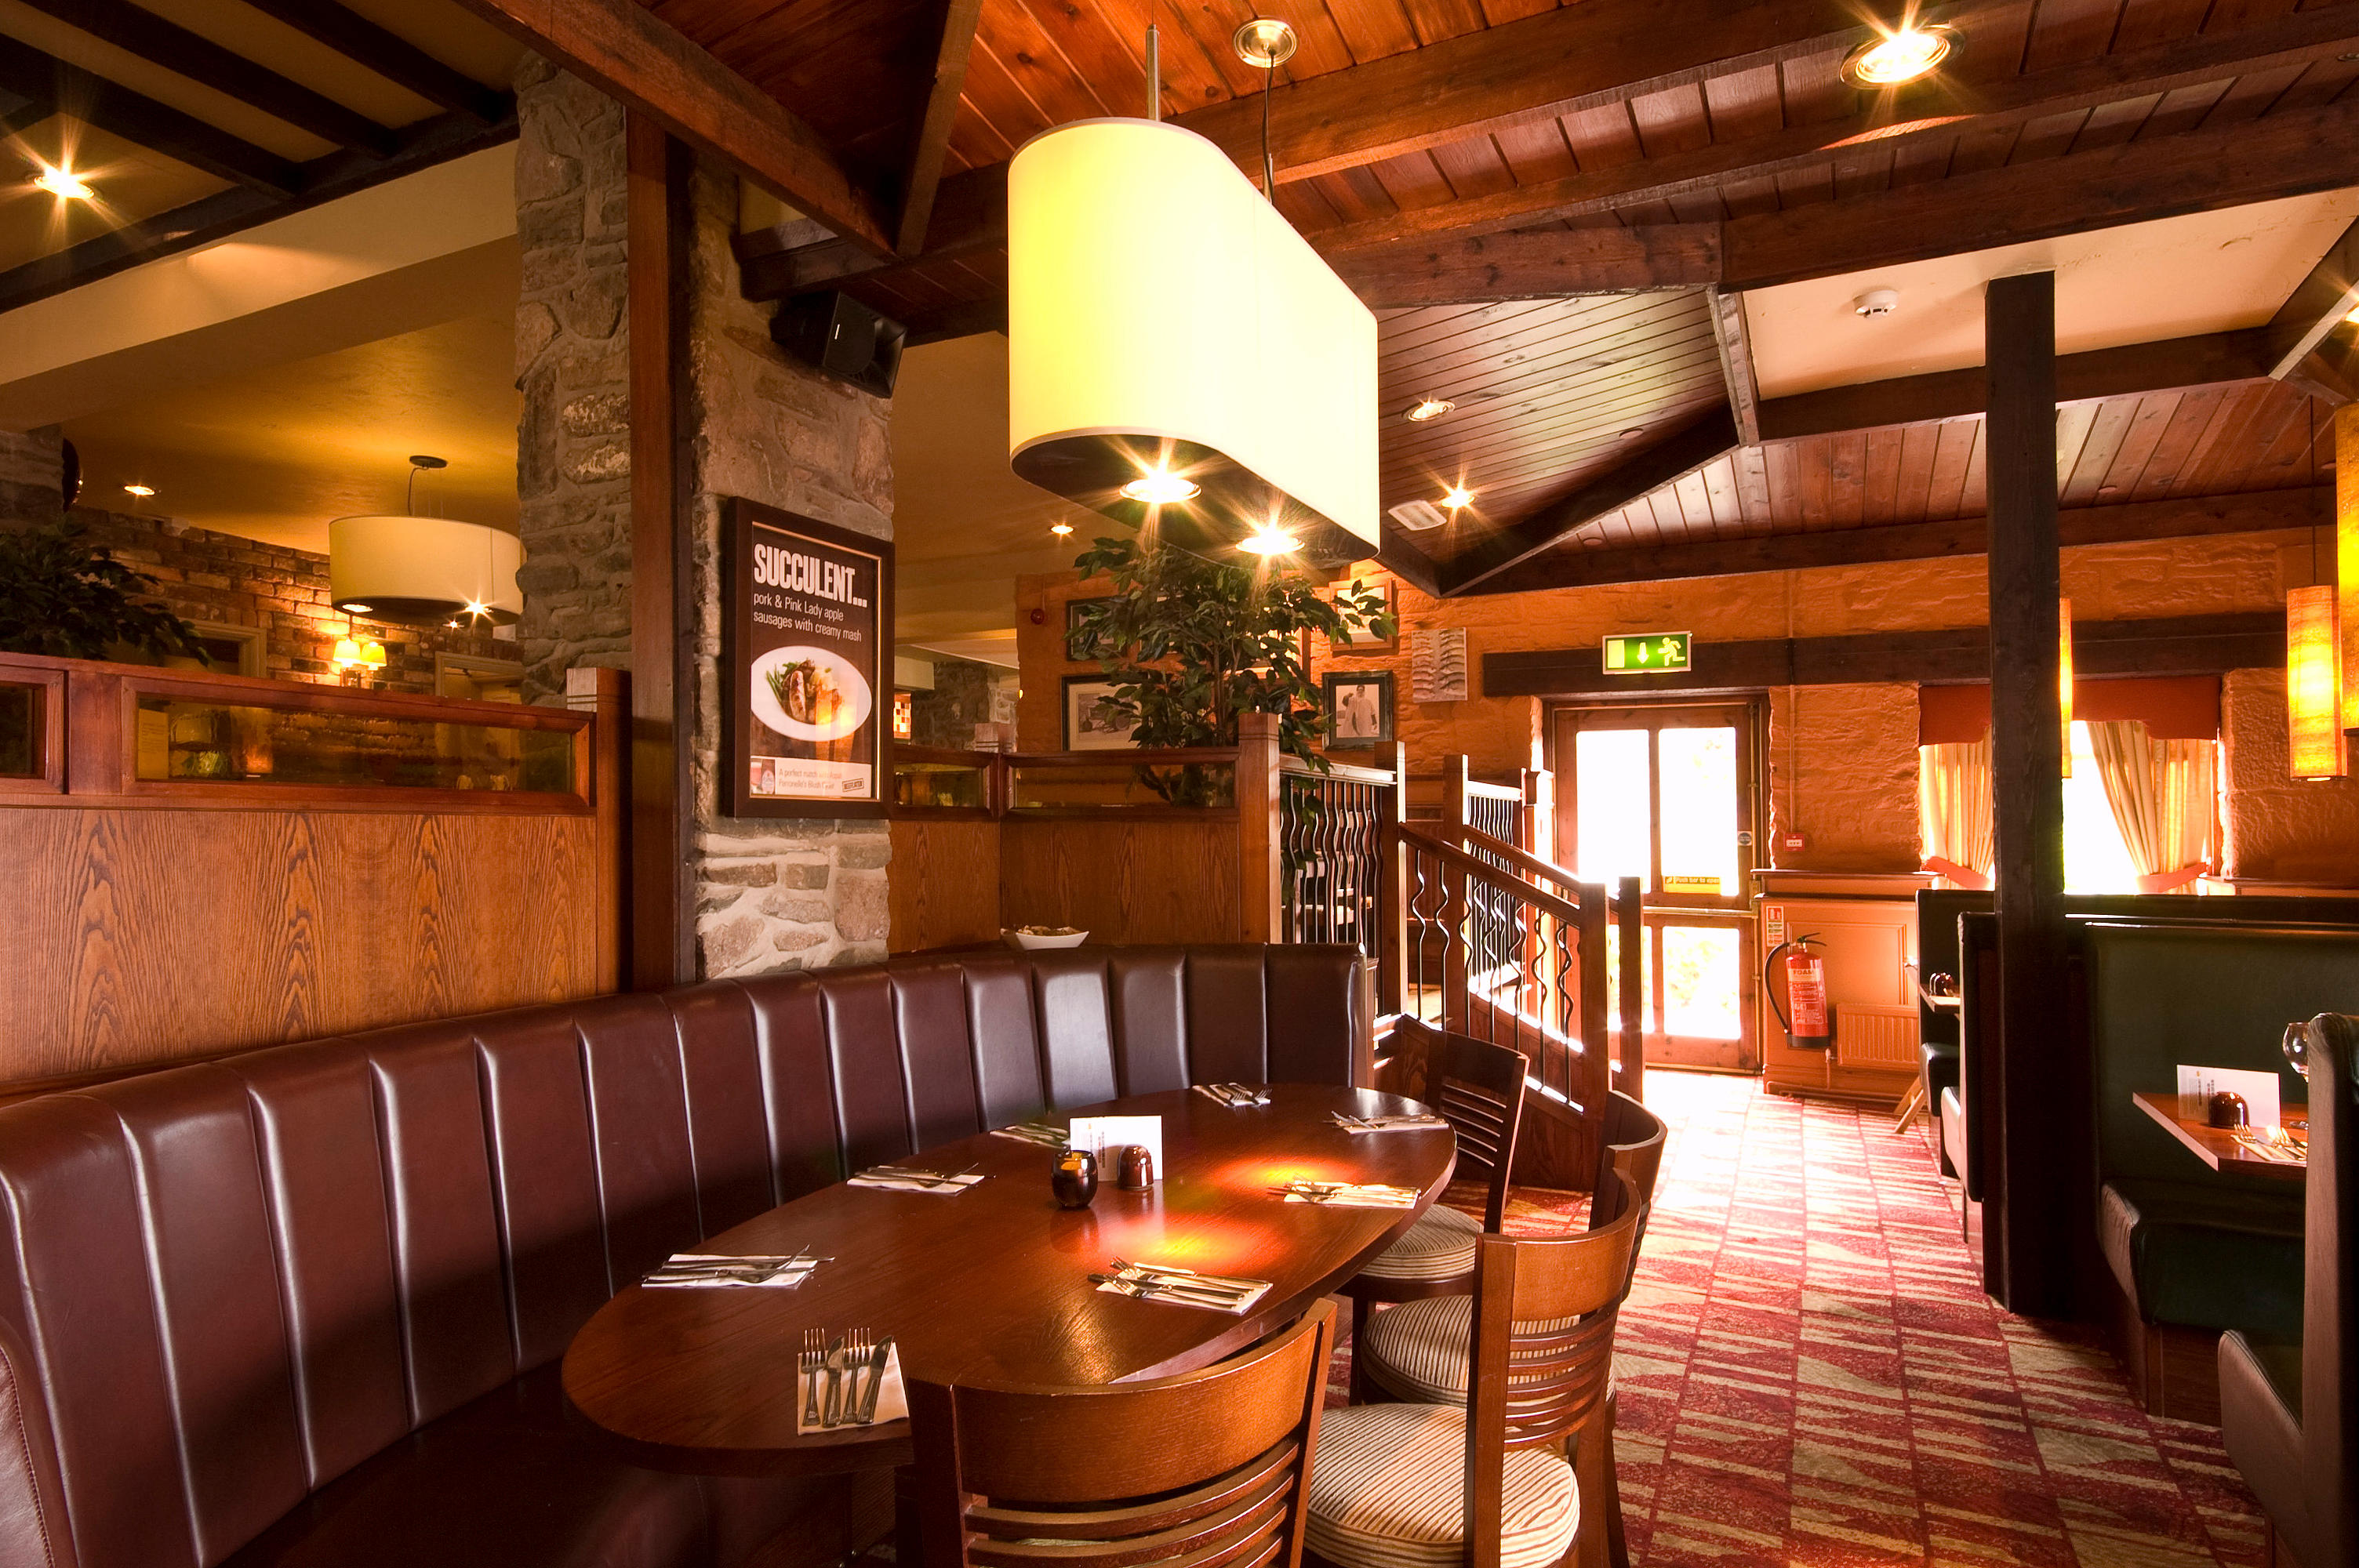 Beefeater restaurant interior Premier Inn Dundee West hotel Dundee 03337 774659